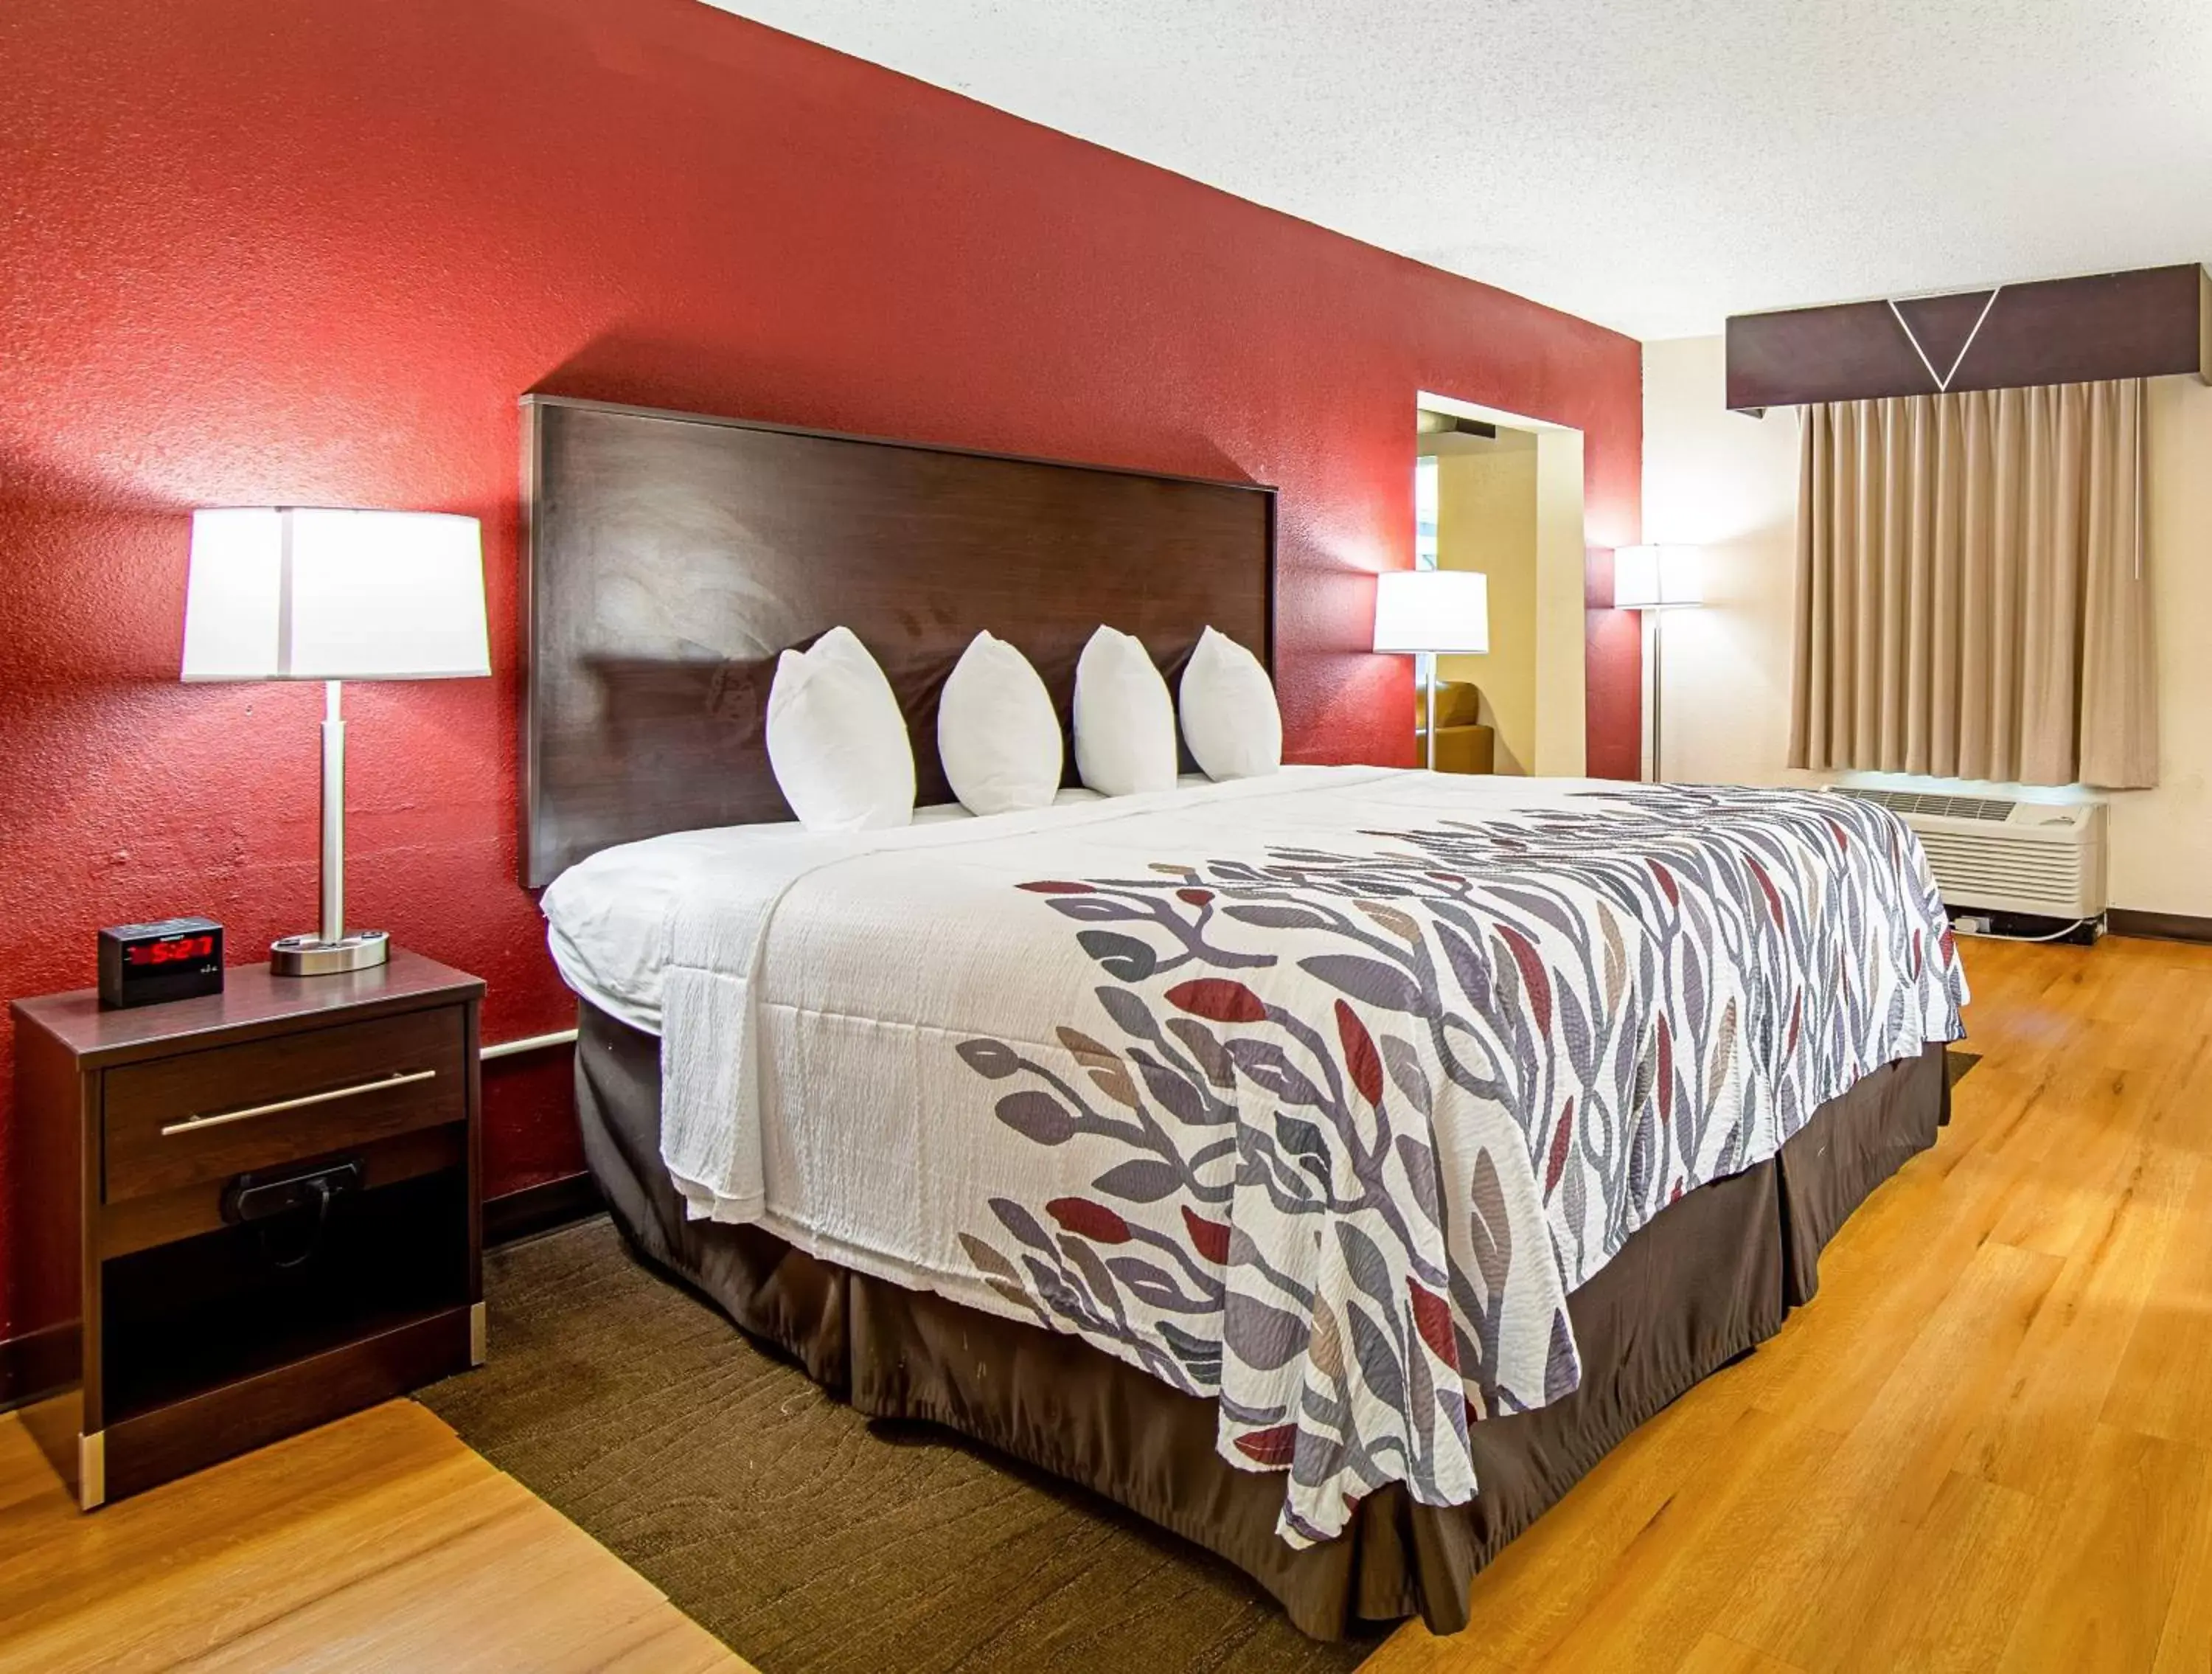 Bedroom, Room Photo in Red Roof Inn & Suites Greenwood, SC